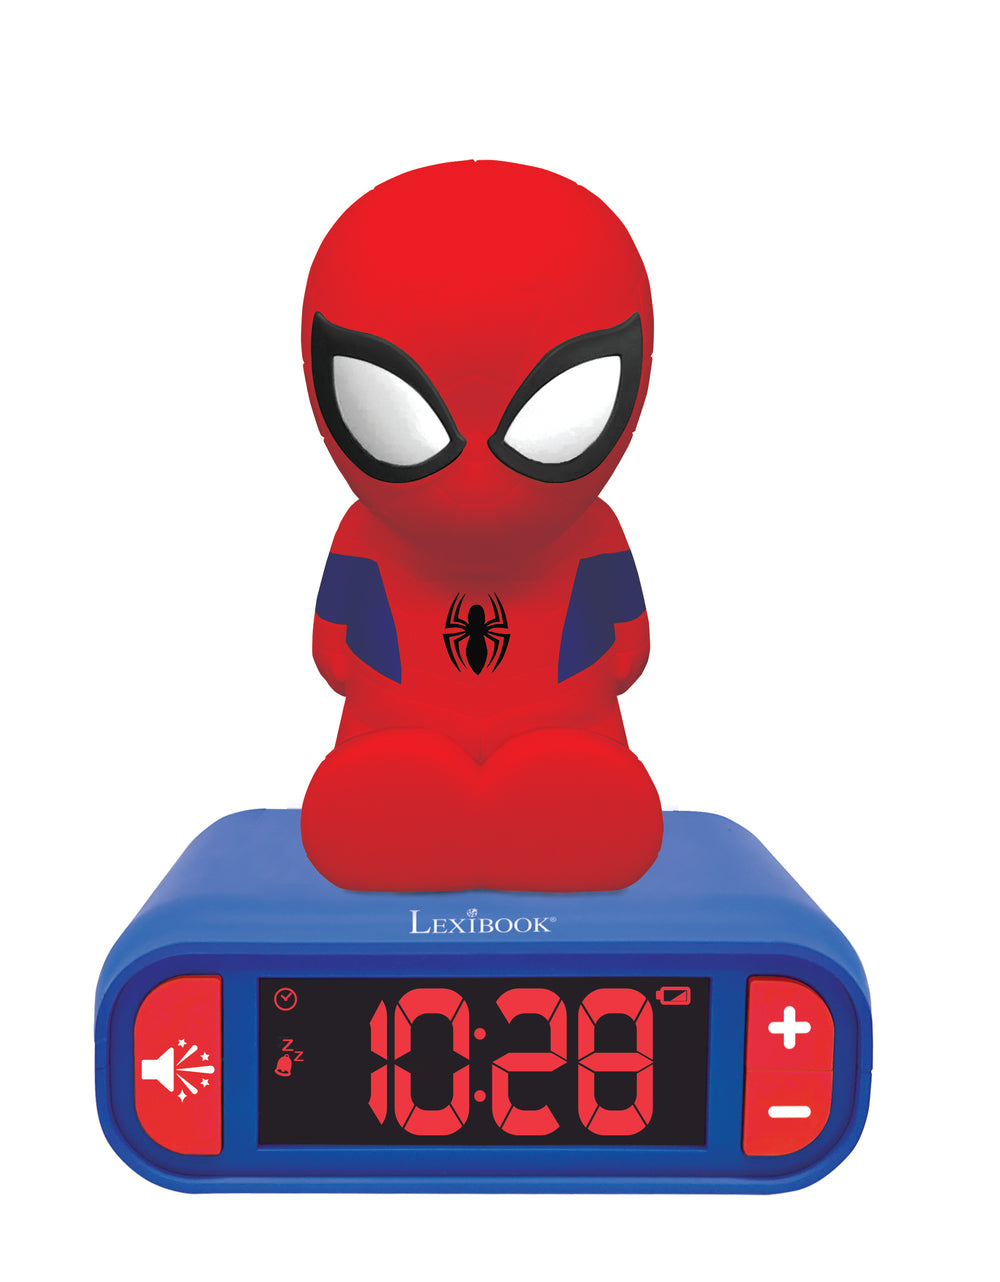 Spider-Man Digital Alarm Clock with Nightlight - Exciting Sound Effects